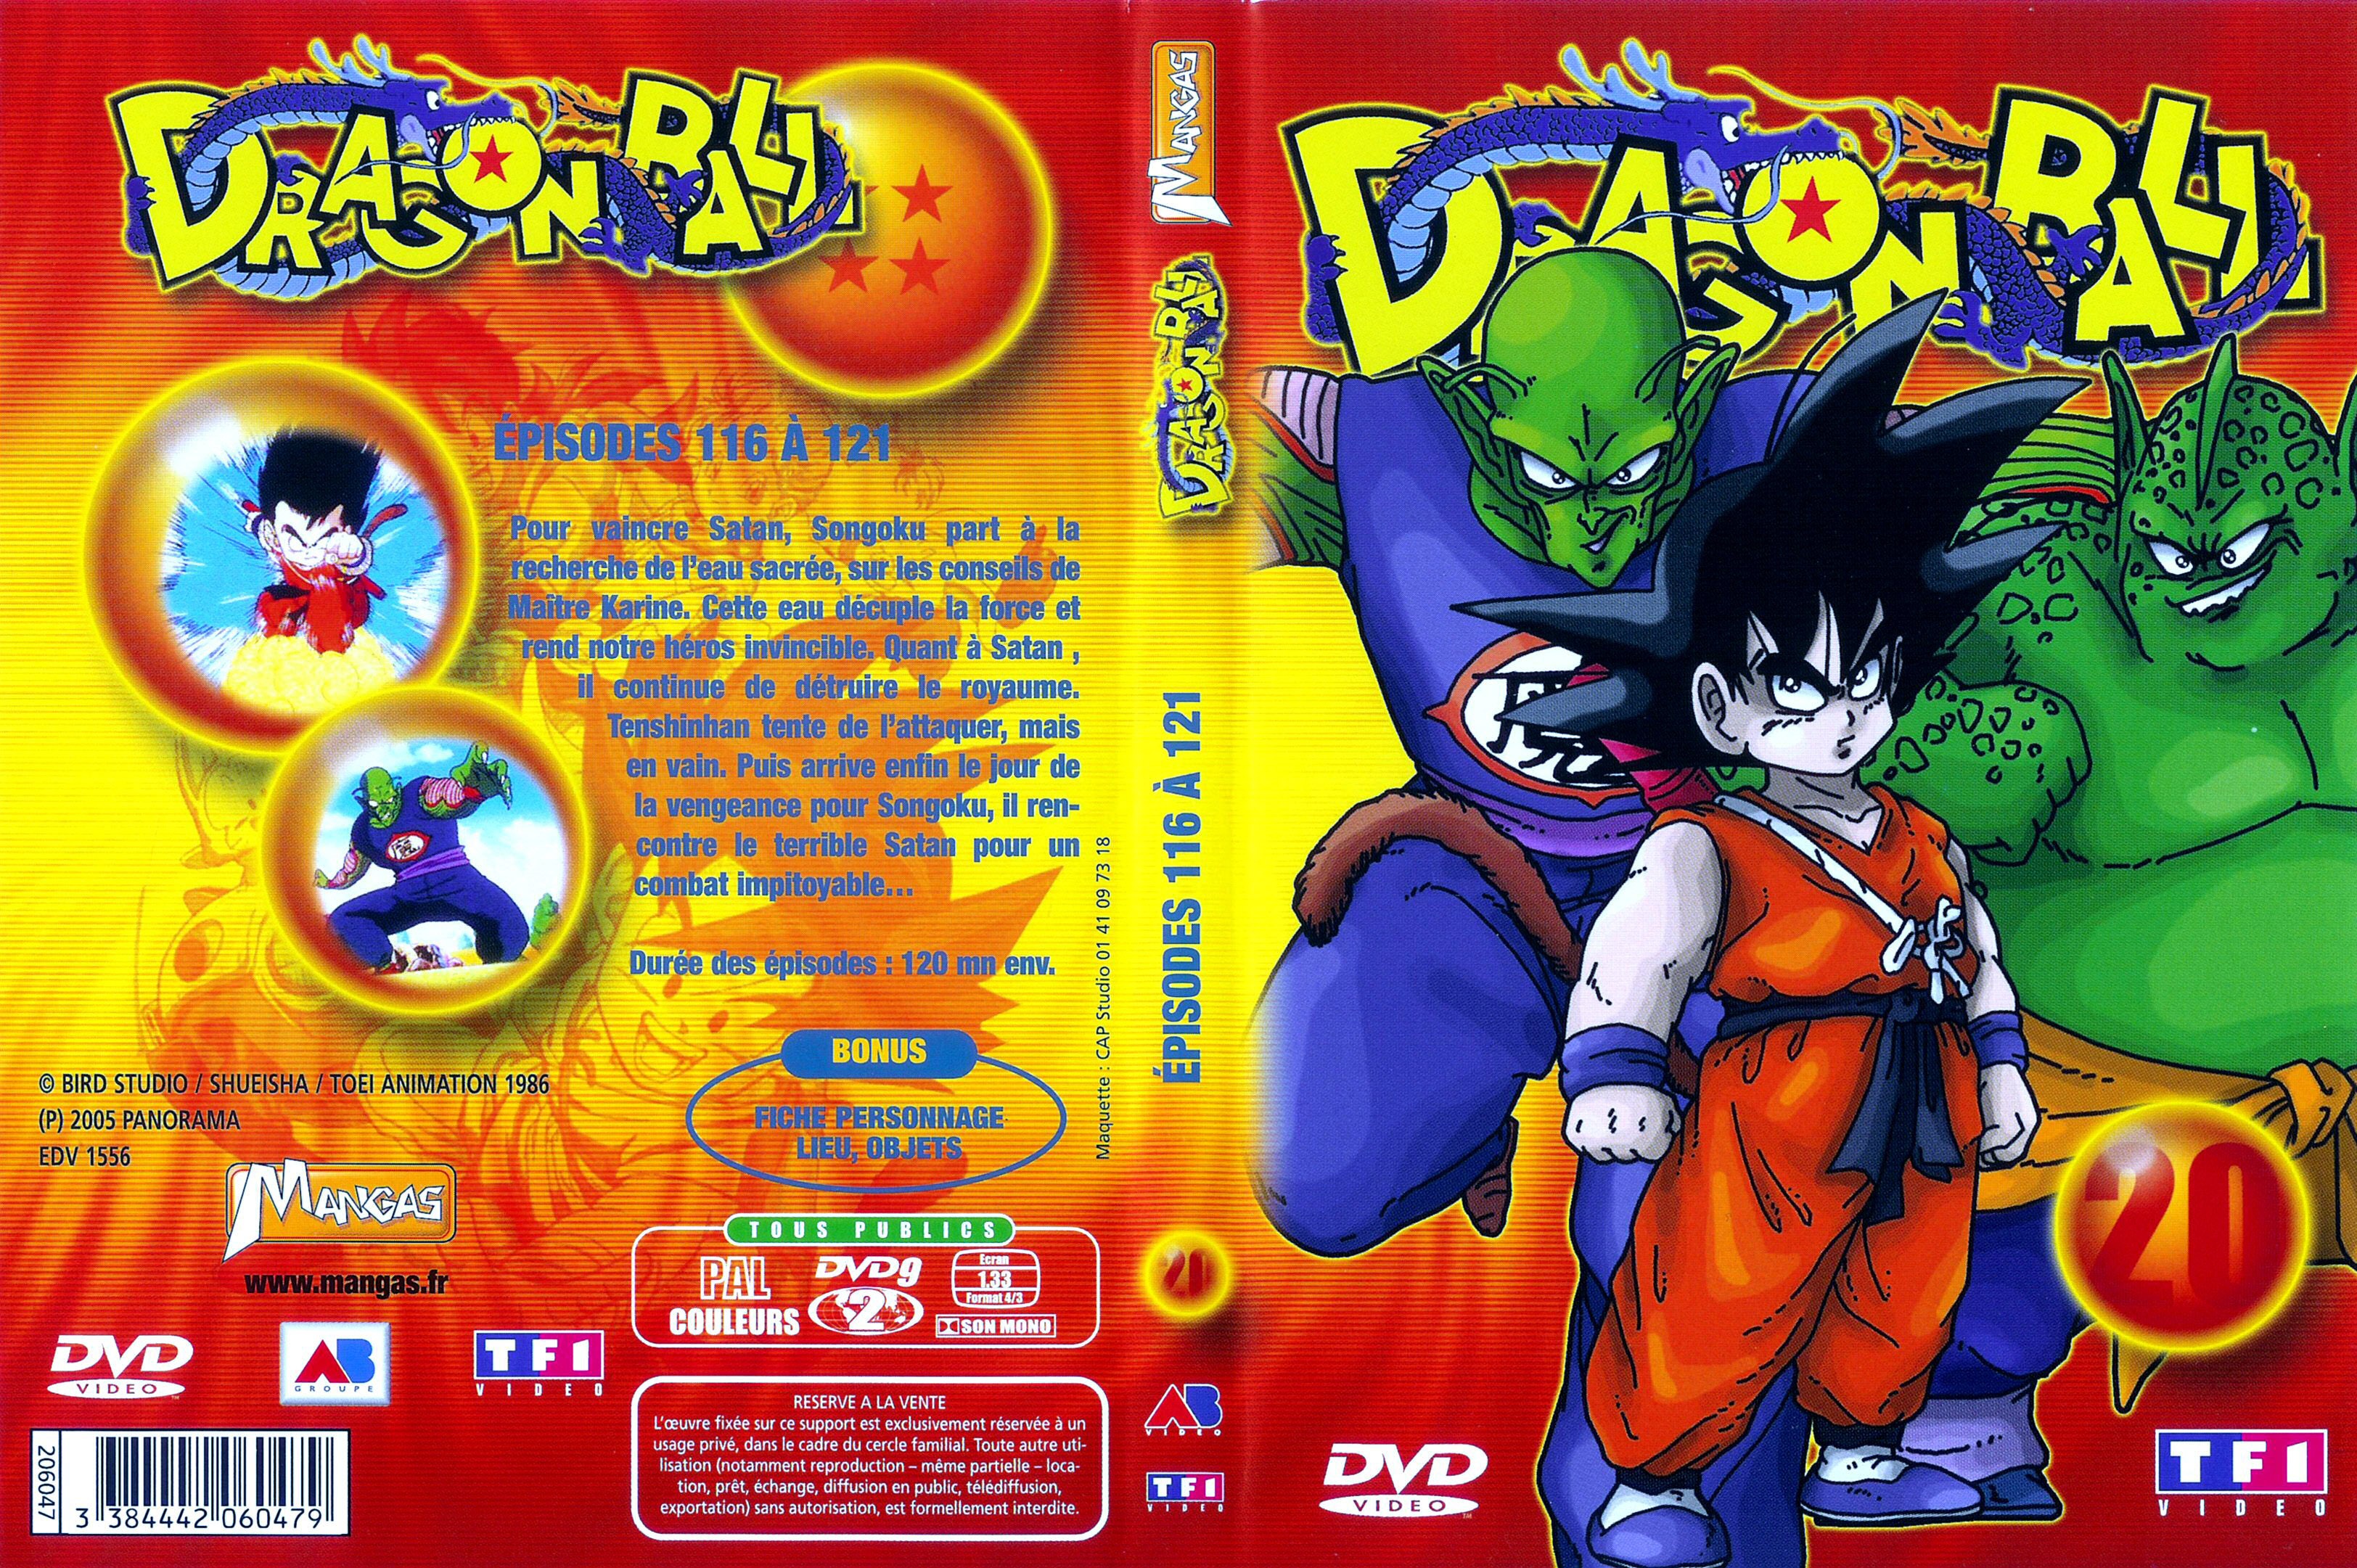 Jaquette DVD Dragon ball vol 20